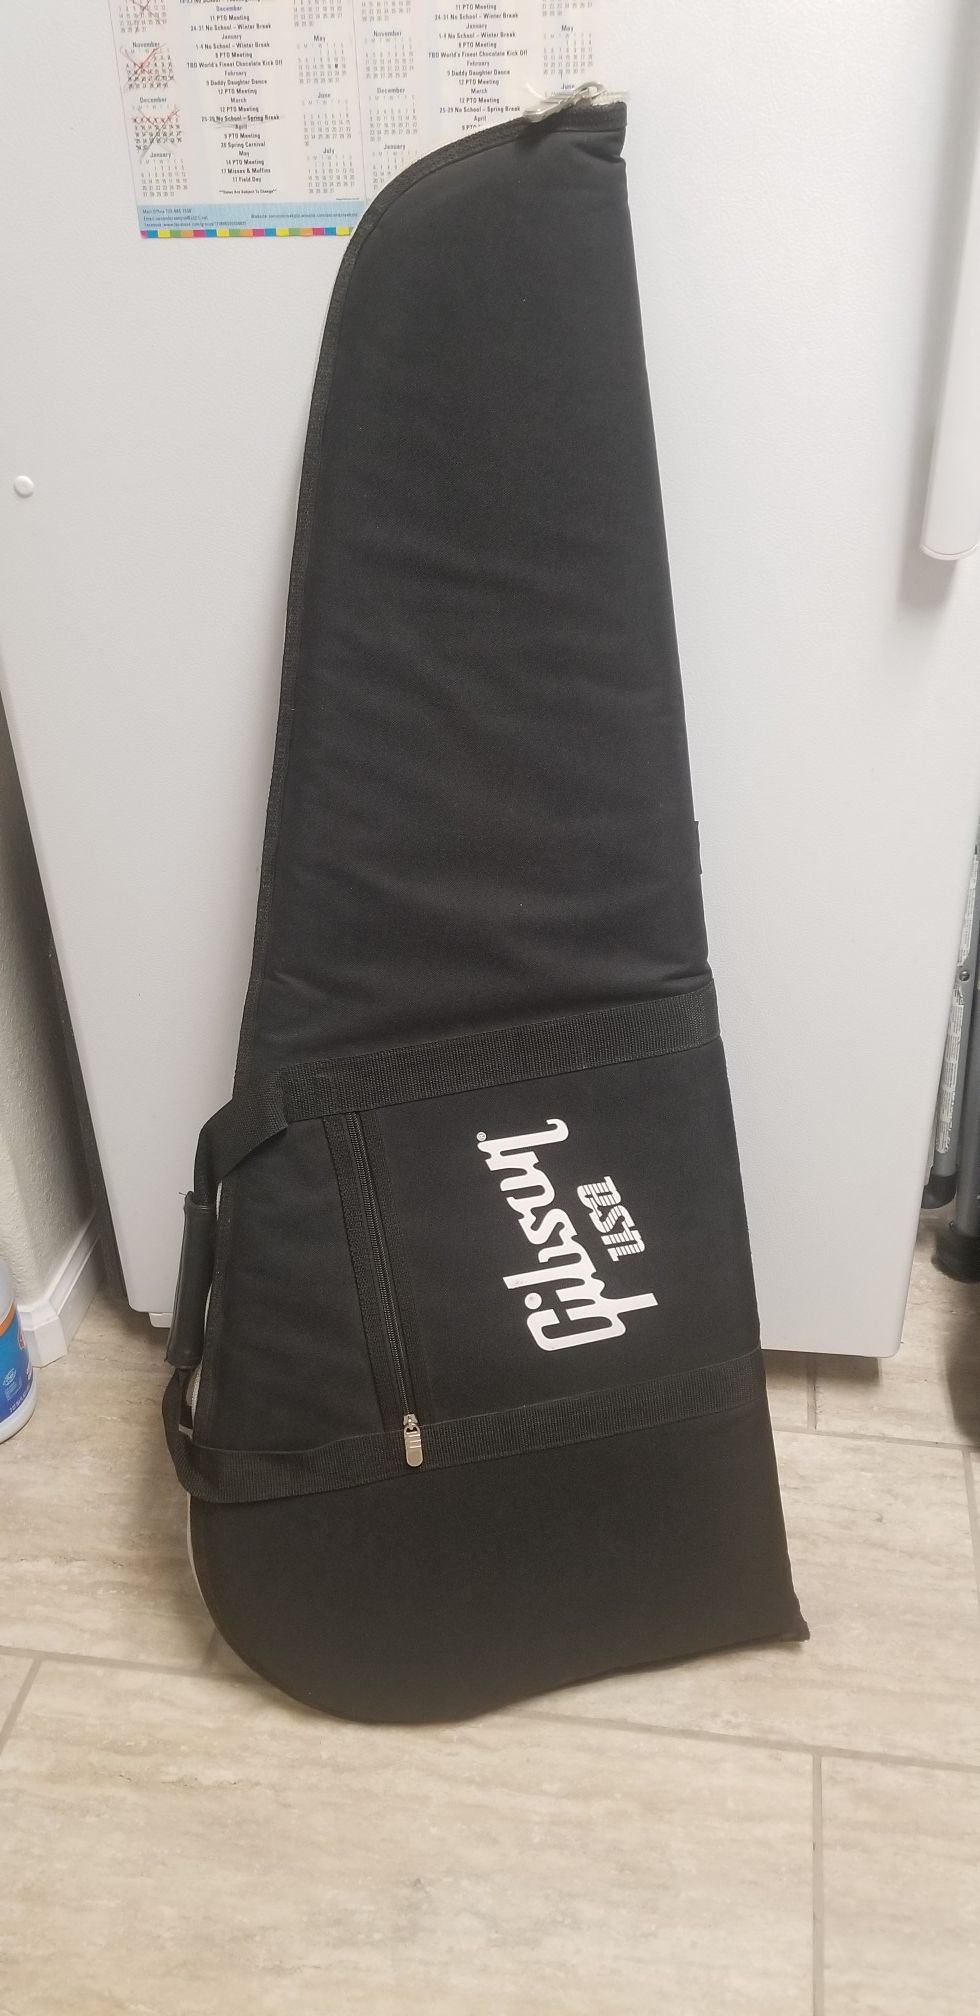 Gibson guitar bag